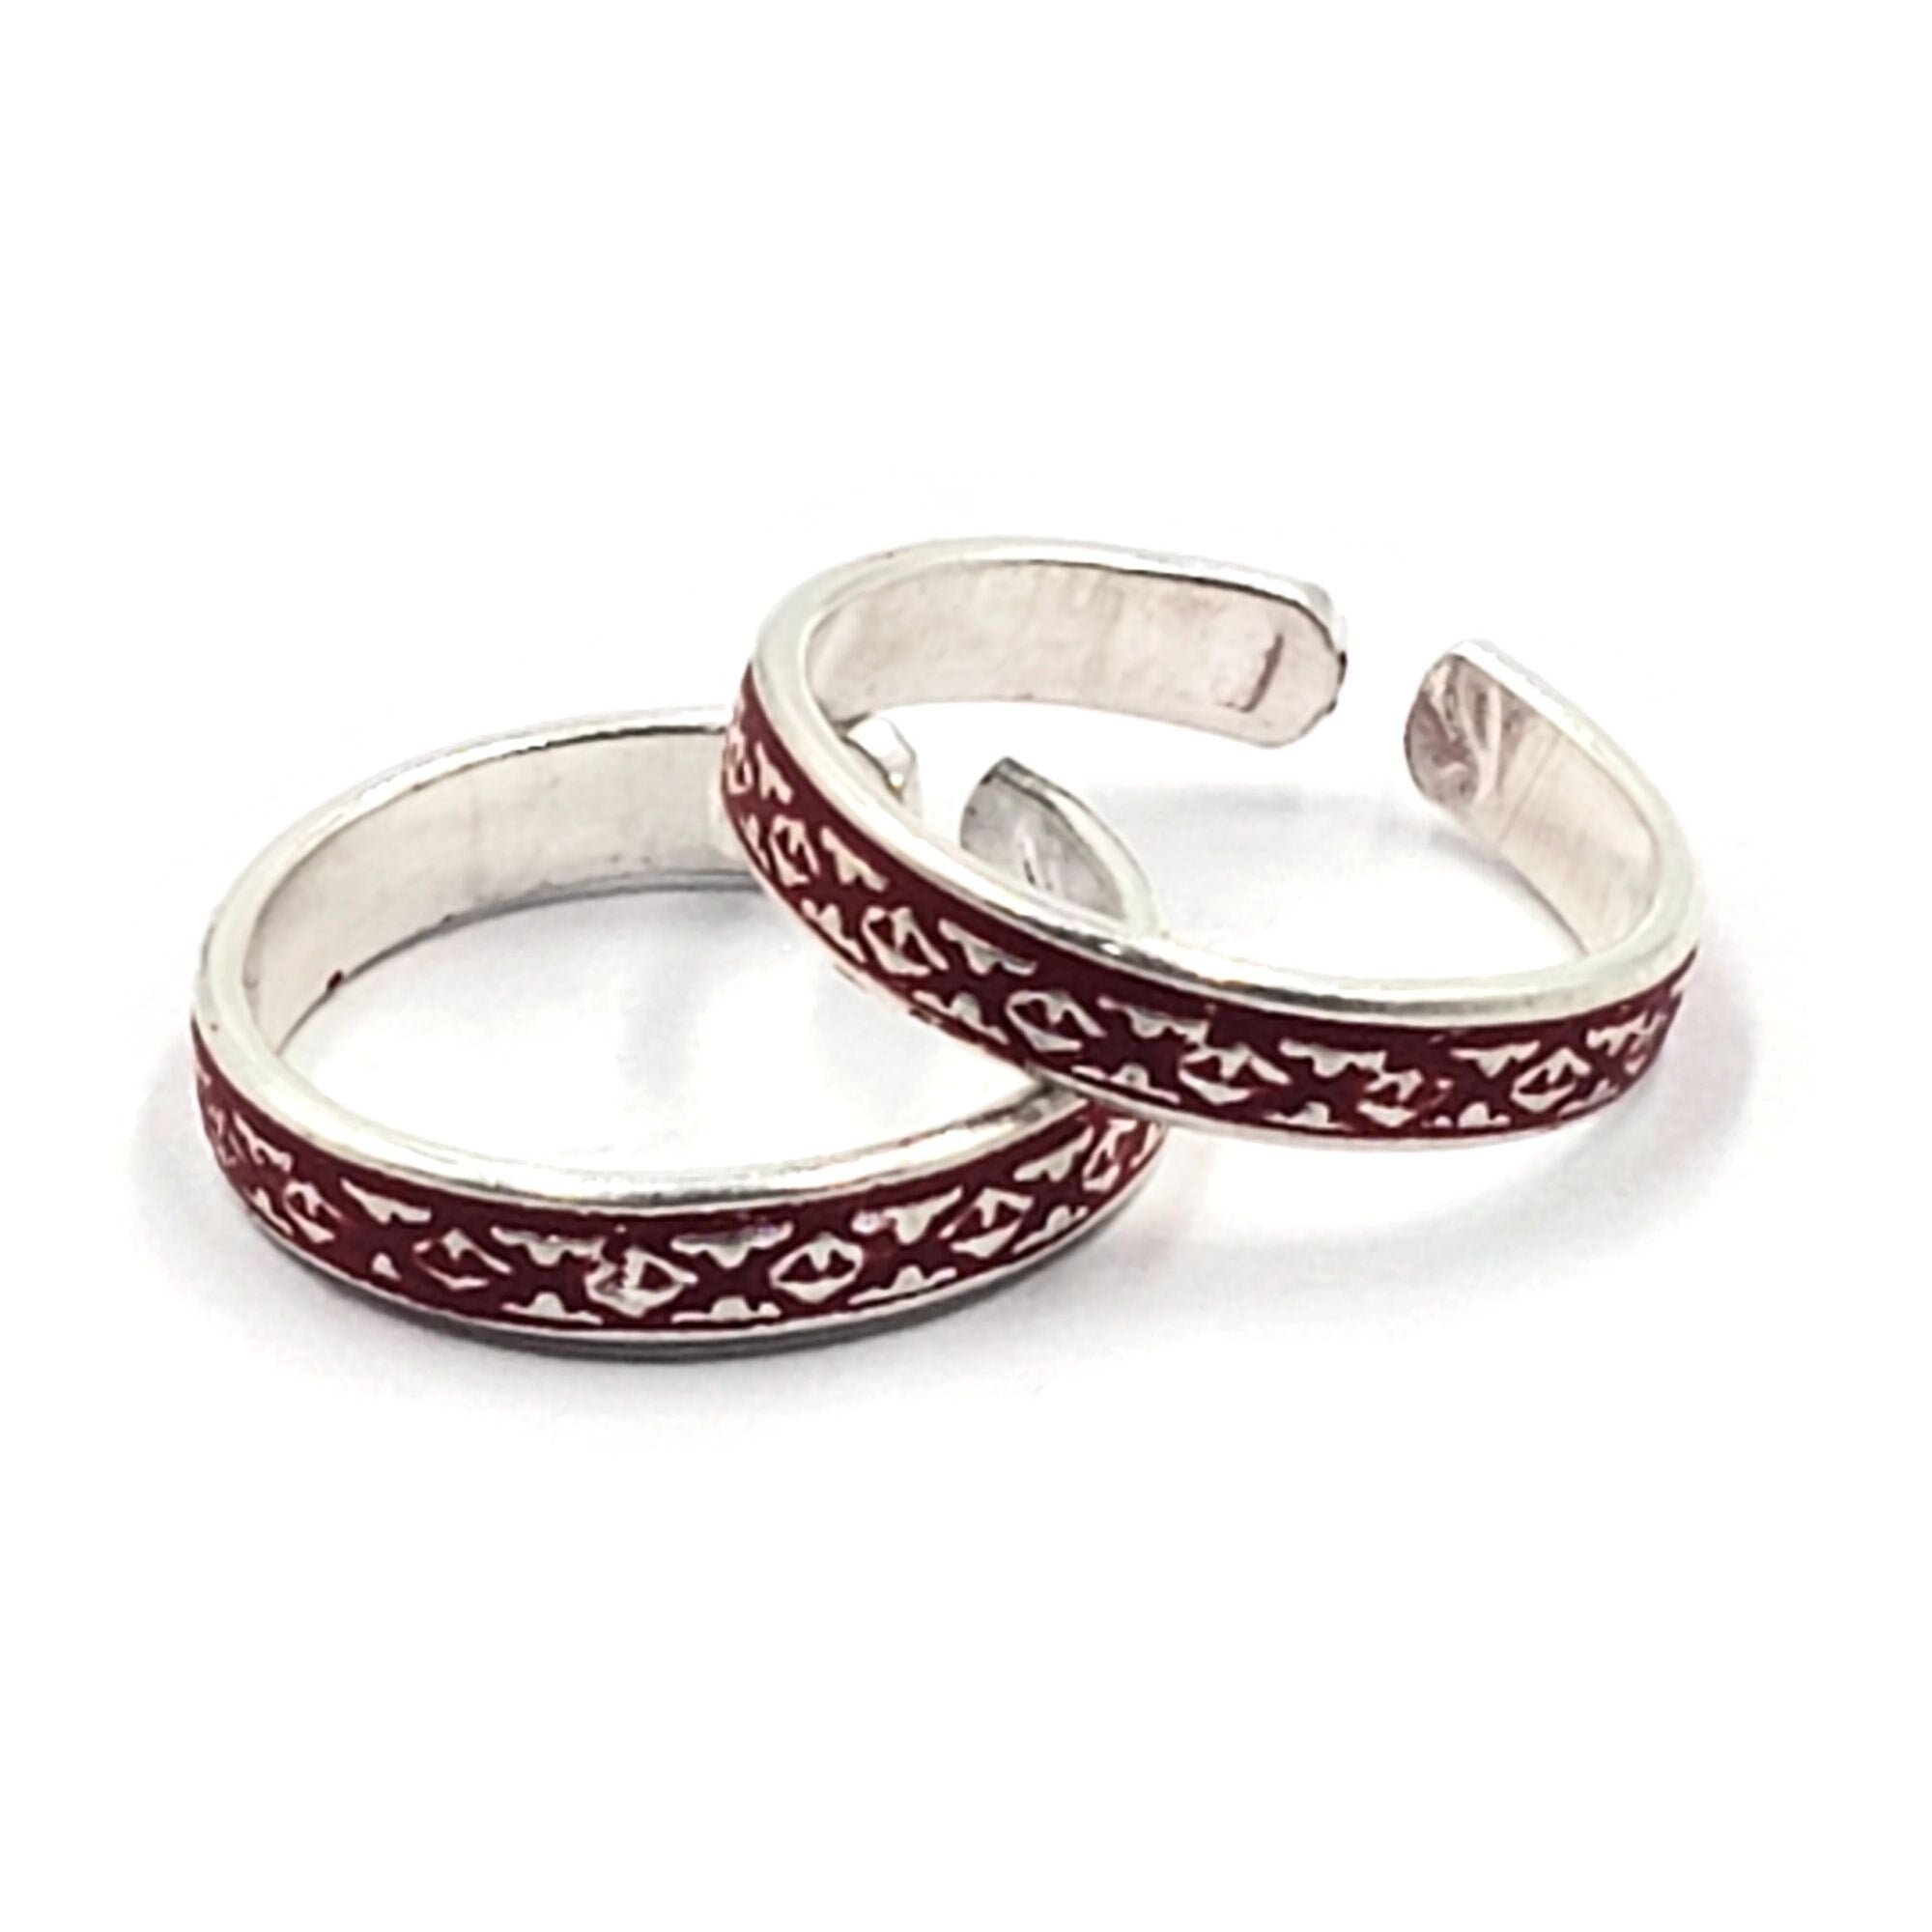 Buy adjustable toe rings pair for women indian bichua bichiya real silver